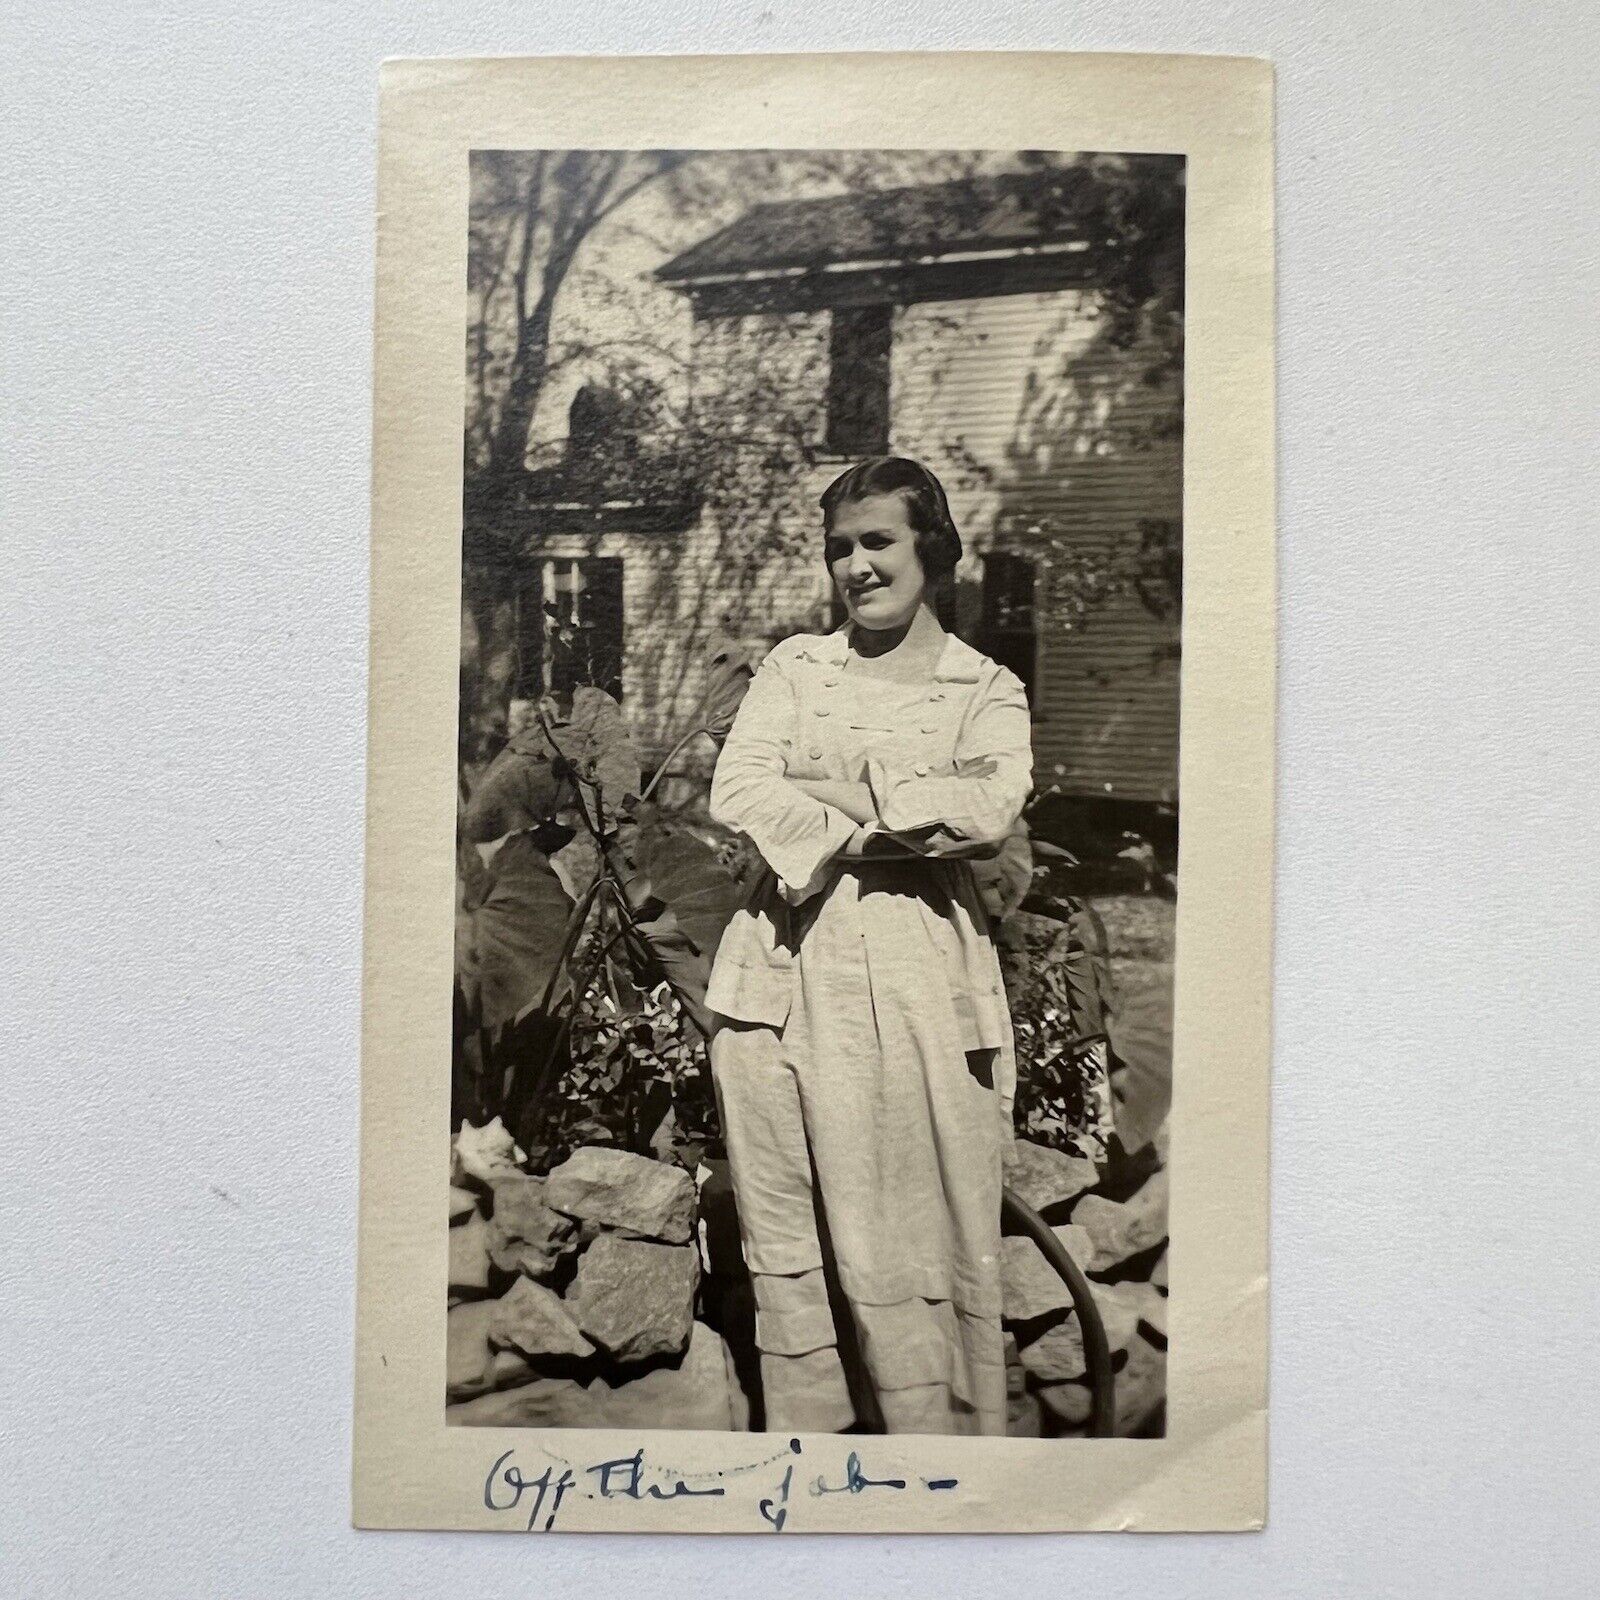 Antique B&W Snapshot Photograph Beautiful Young Women “Off The Job” Inscription